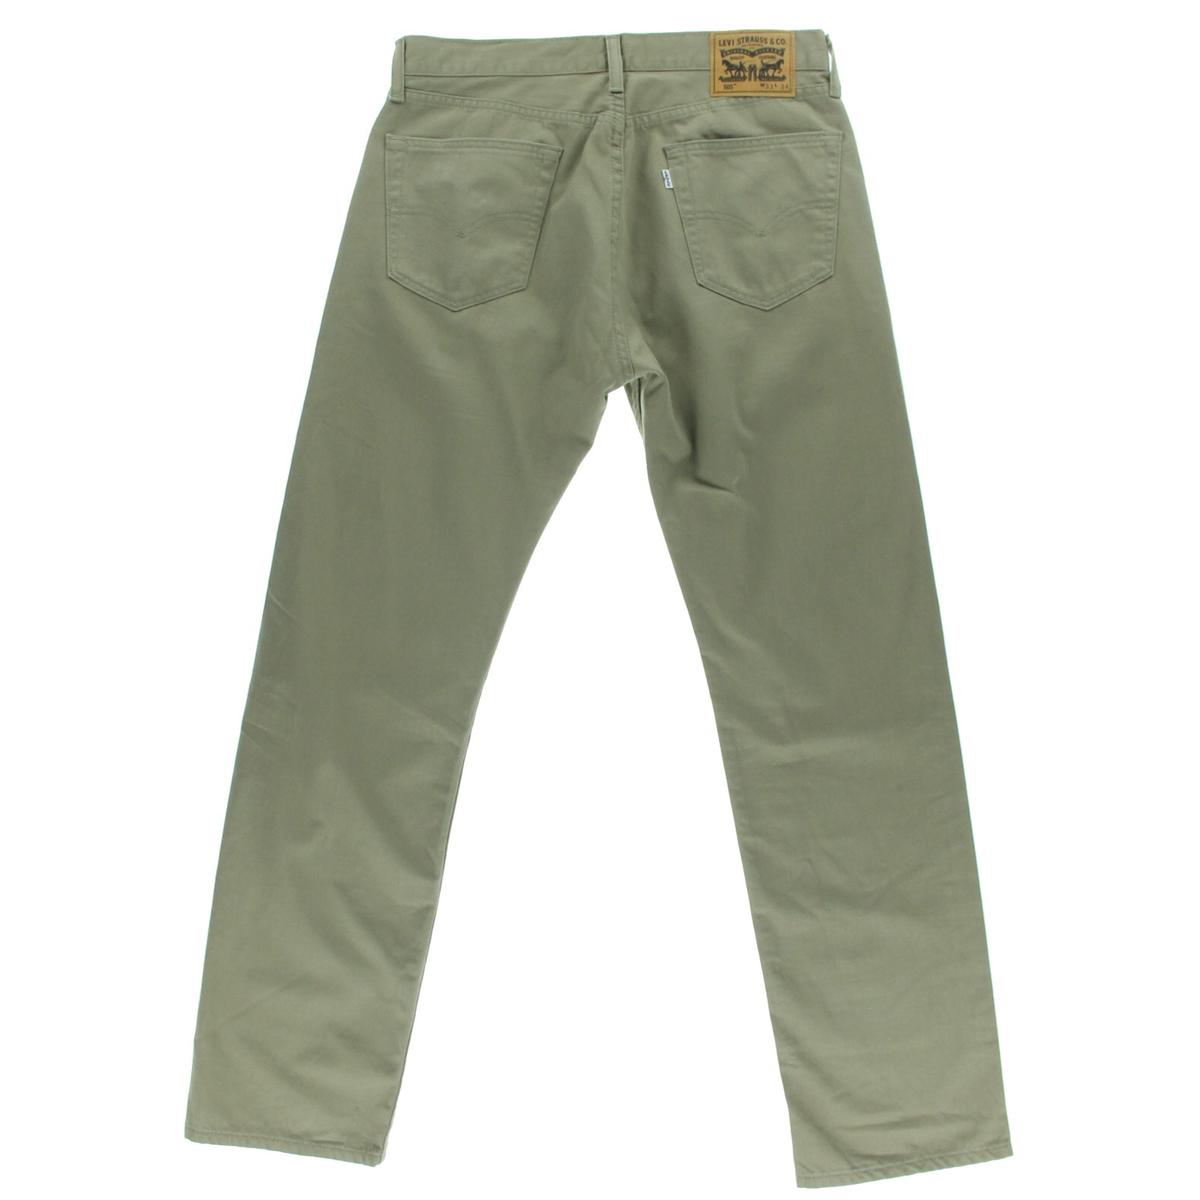 Levi's Mens 505 Tan Colored Regular Fit Straight Leg Jeans 29/30 BHFO ...